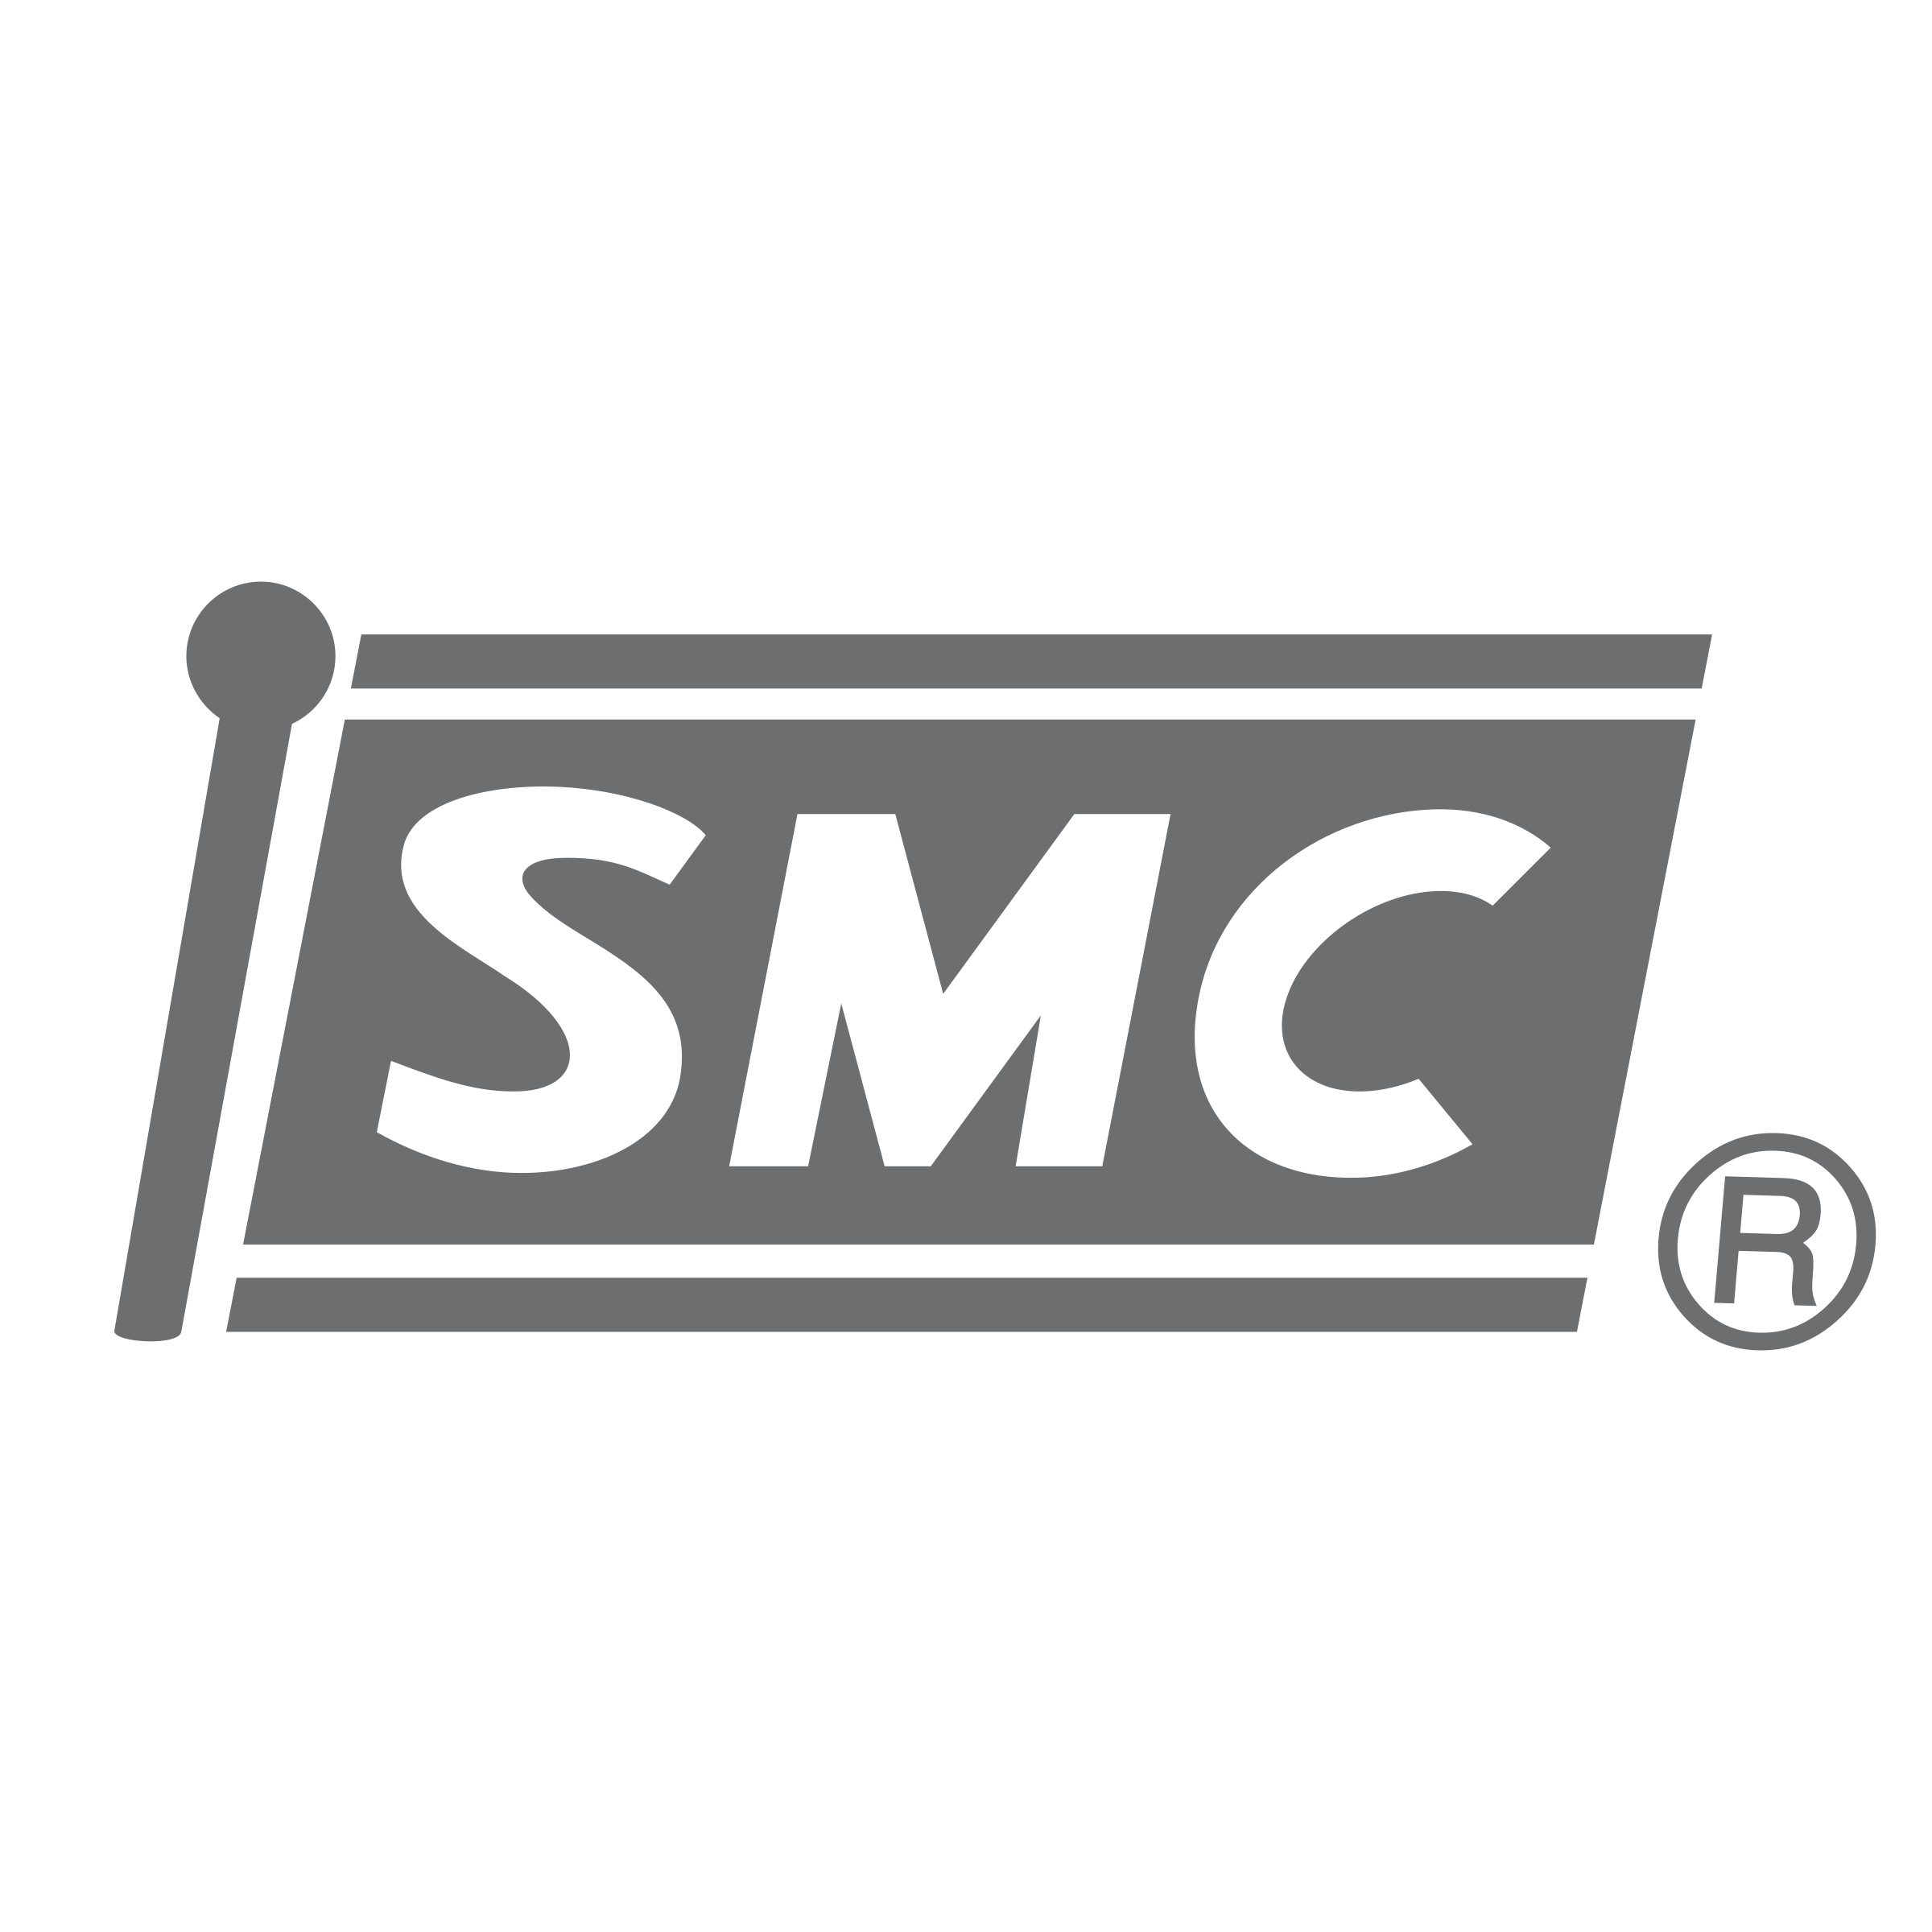 SMC Logo - SMC Logo PNG Transparent & SVG Vector - Freebie Supply